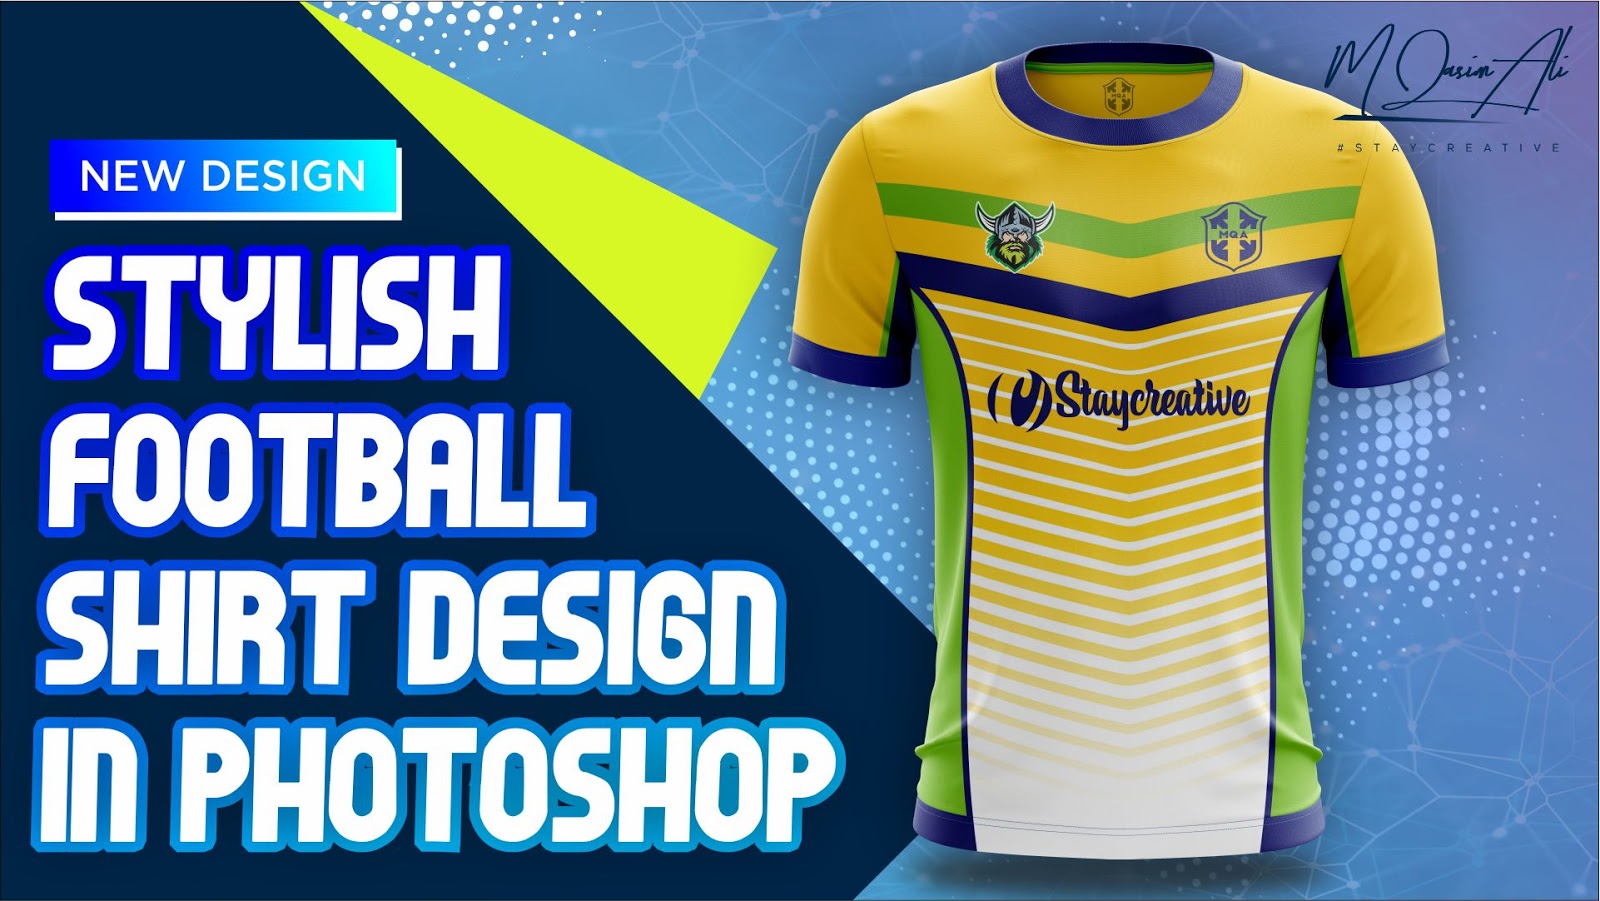 Download Stylish Football Shirt Design in Photoshop cc 2019 by M Qasim Ali - M Qasim Ali - Sports ...